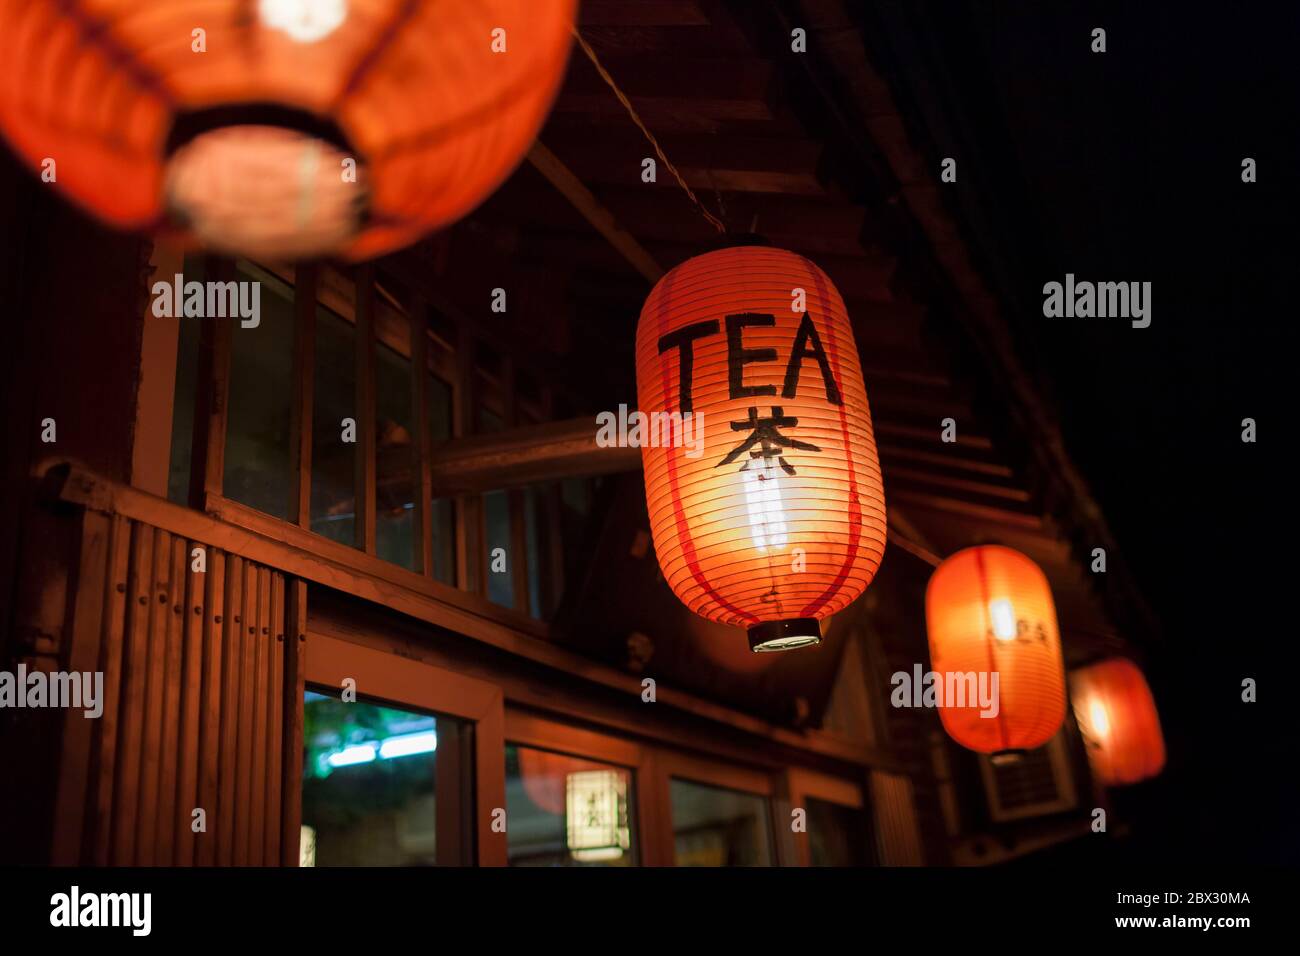 China, Beijing Municipality, City of Beijing, night view of traditional  lanterns illuminated, announcing a teahouse Stock Photo - Alamy